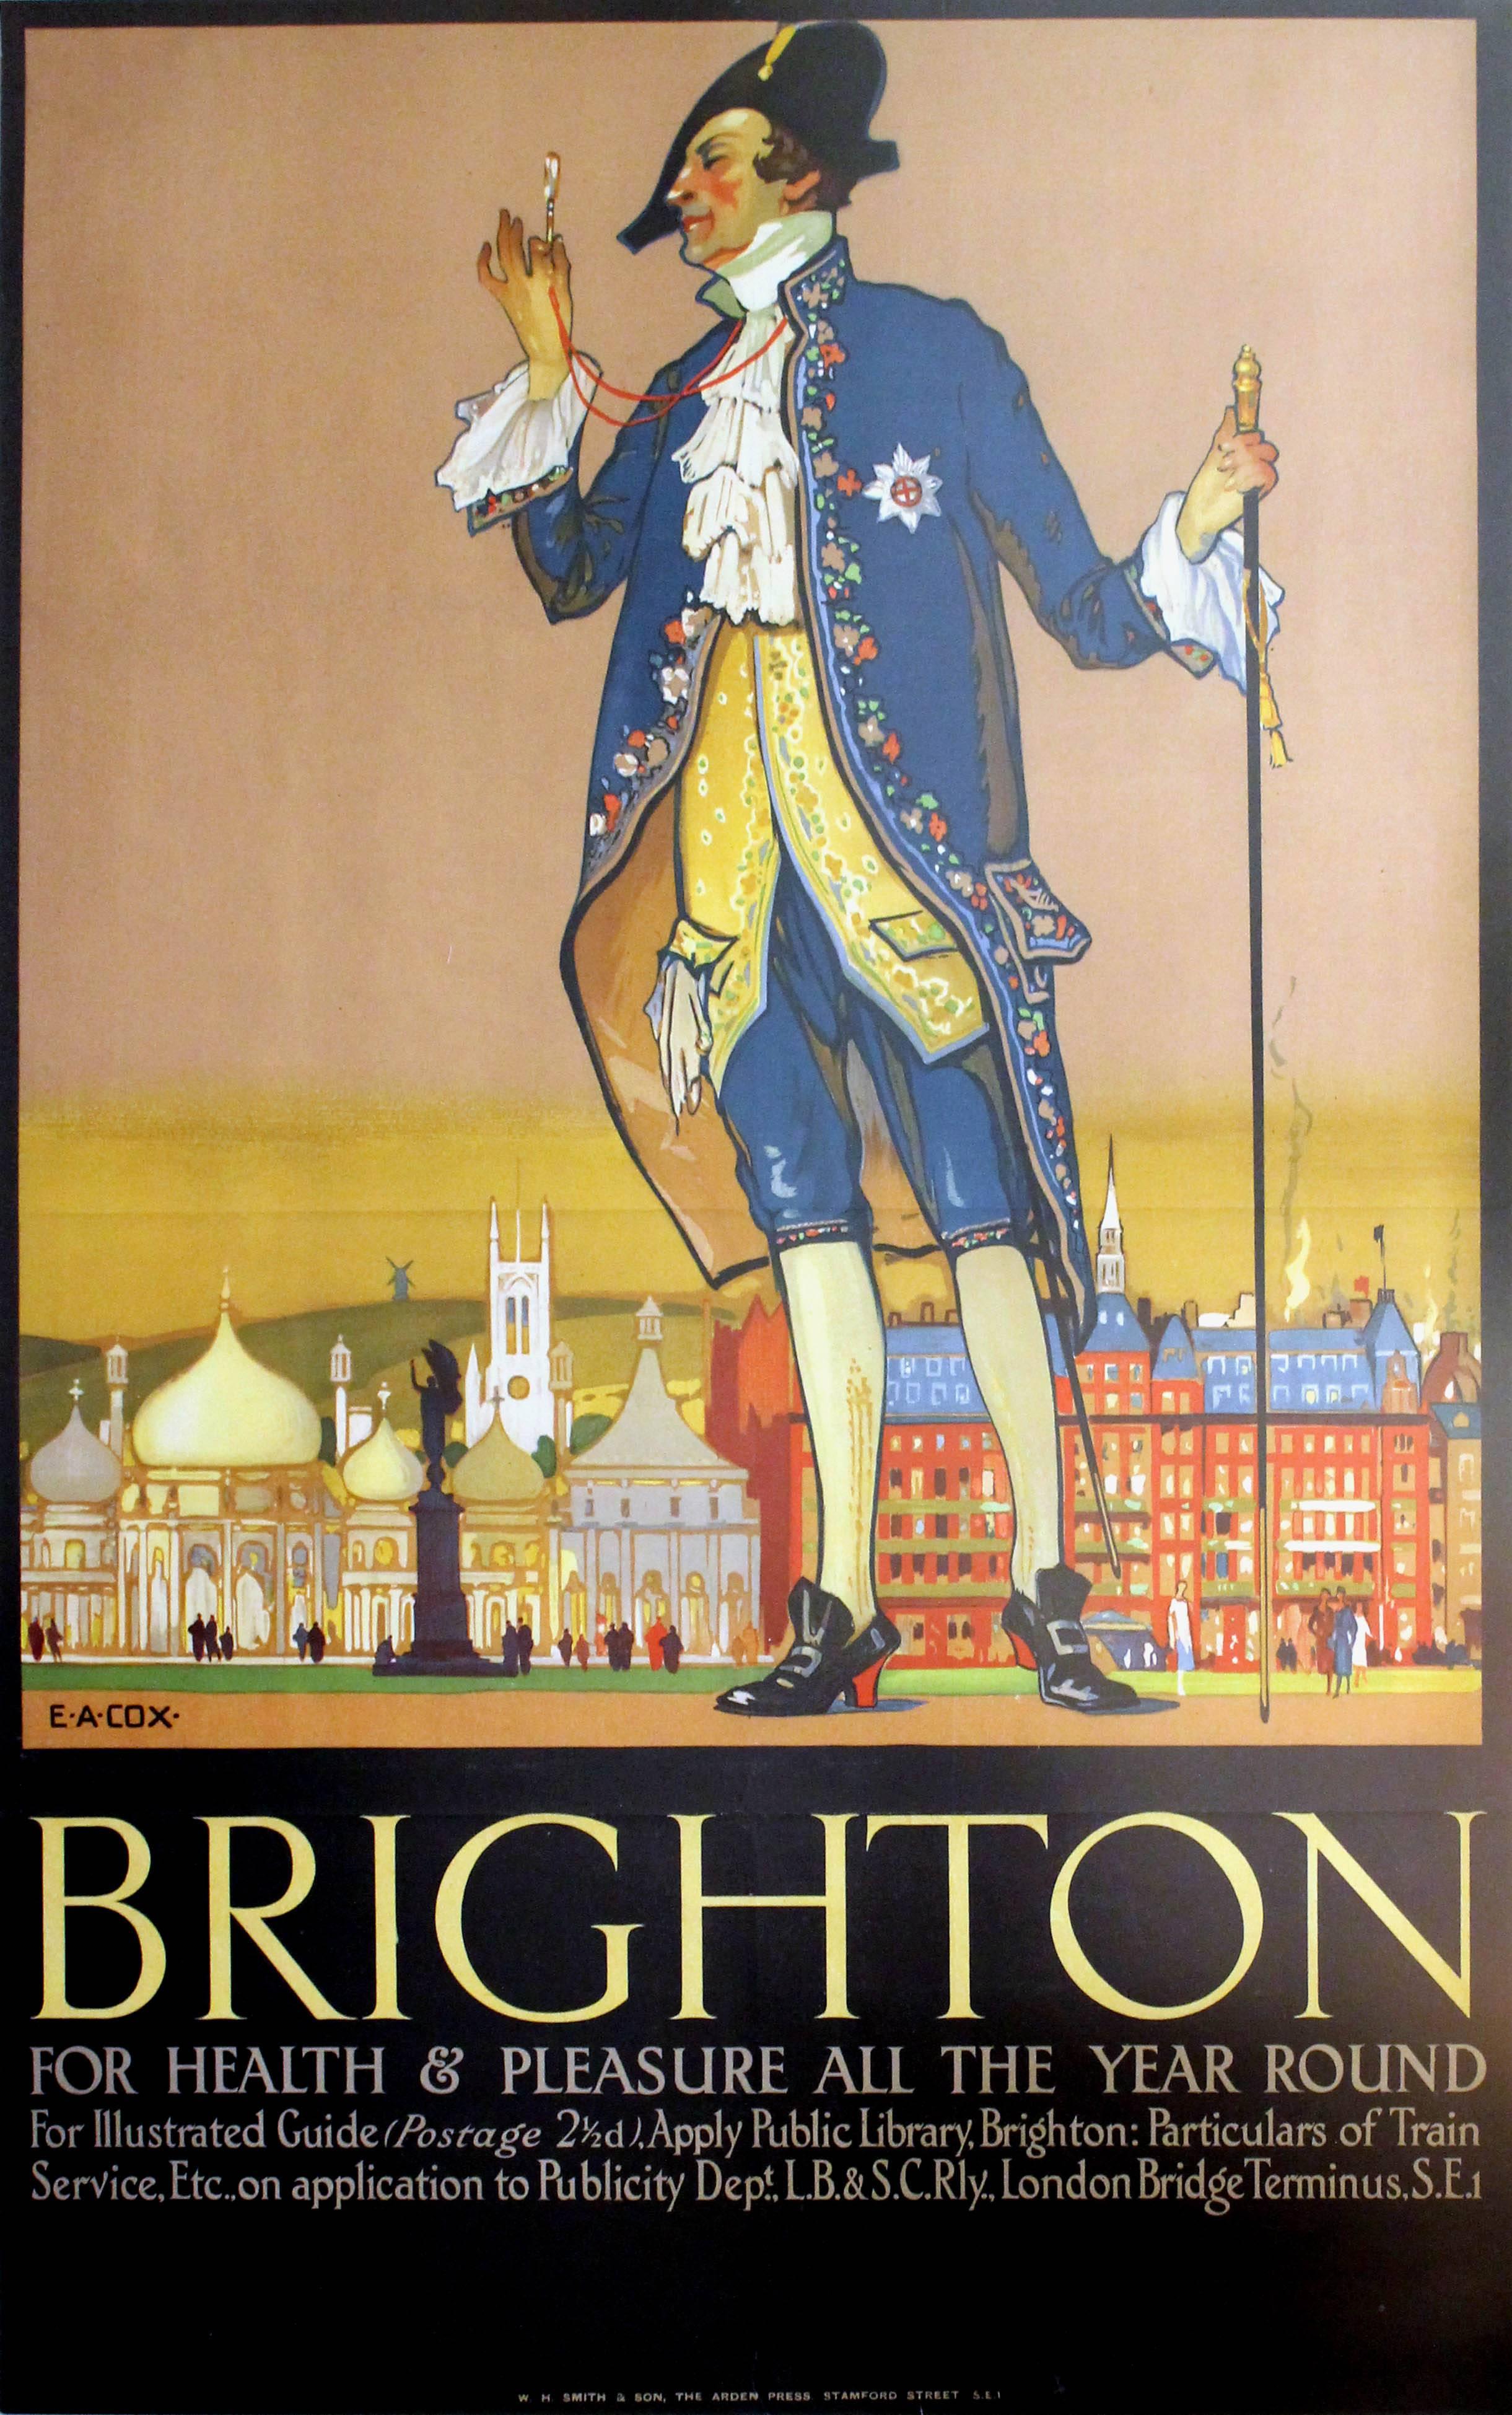 Elijah Albert Cox Print - Original Vintage LB&SC Railway Poster By E A Cox: Brighton For Health & Pleasure